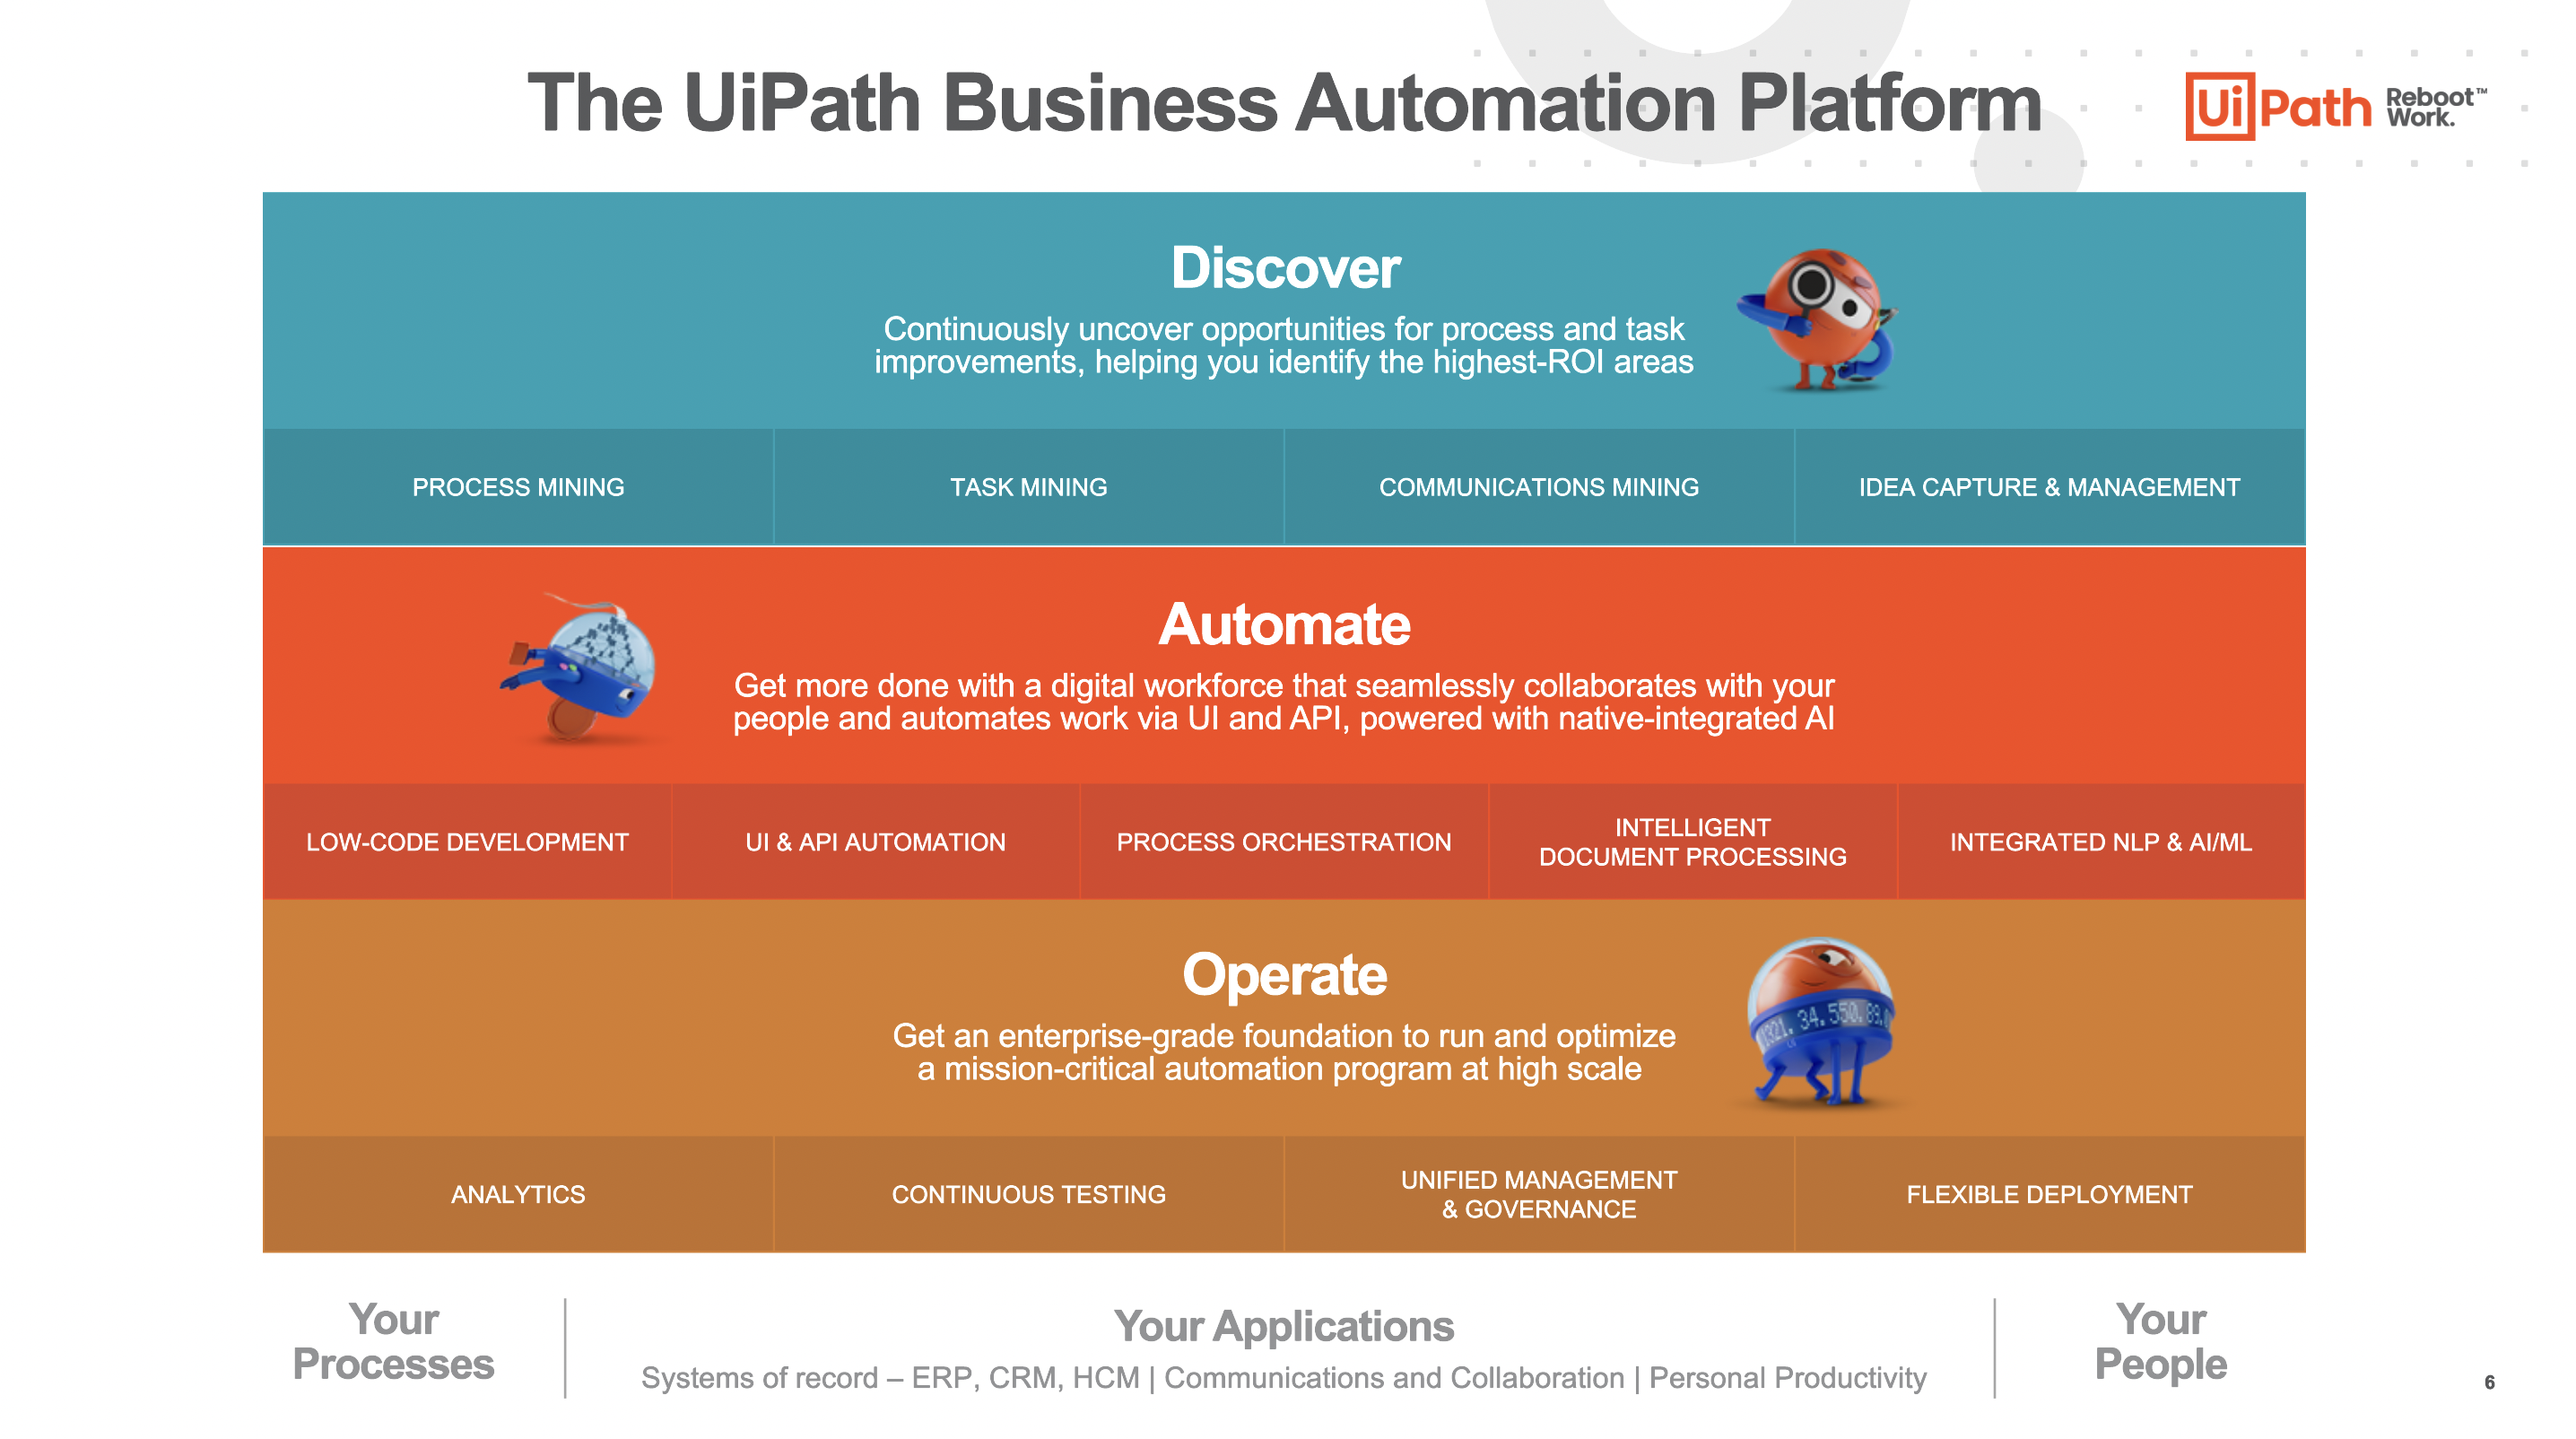 UiPath Business Automation Platform overview